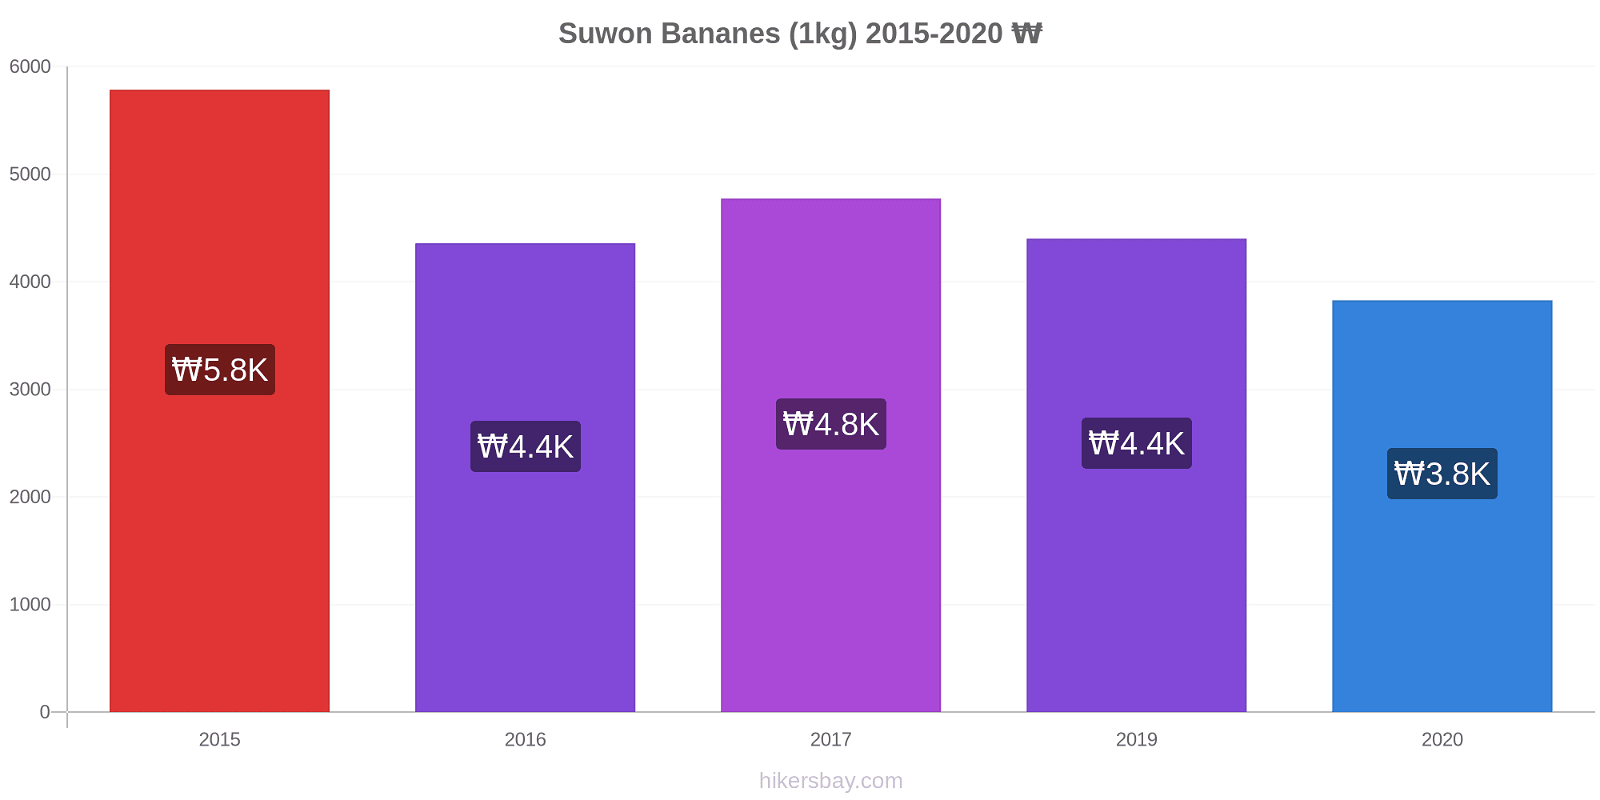 Suwon changements de prix Bananes (1kg) hikersbay.com